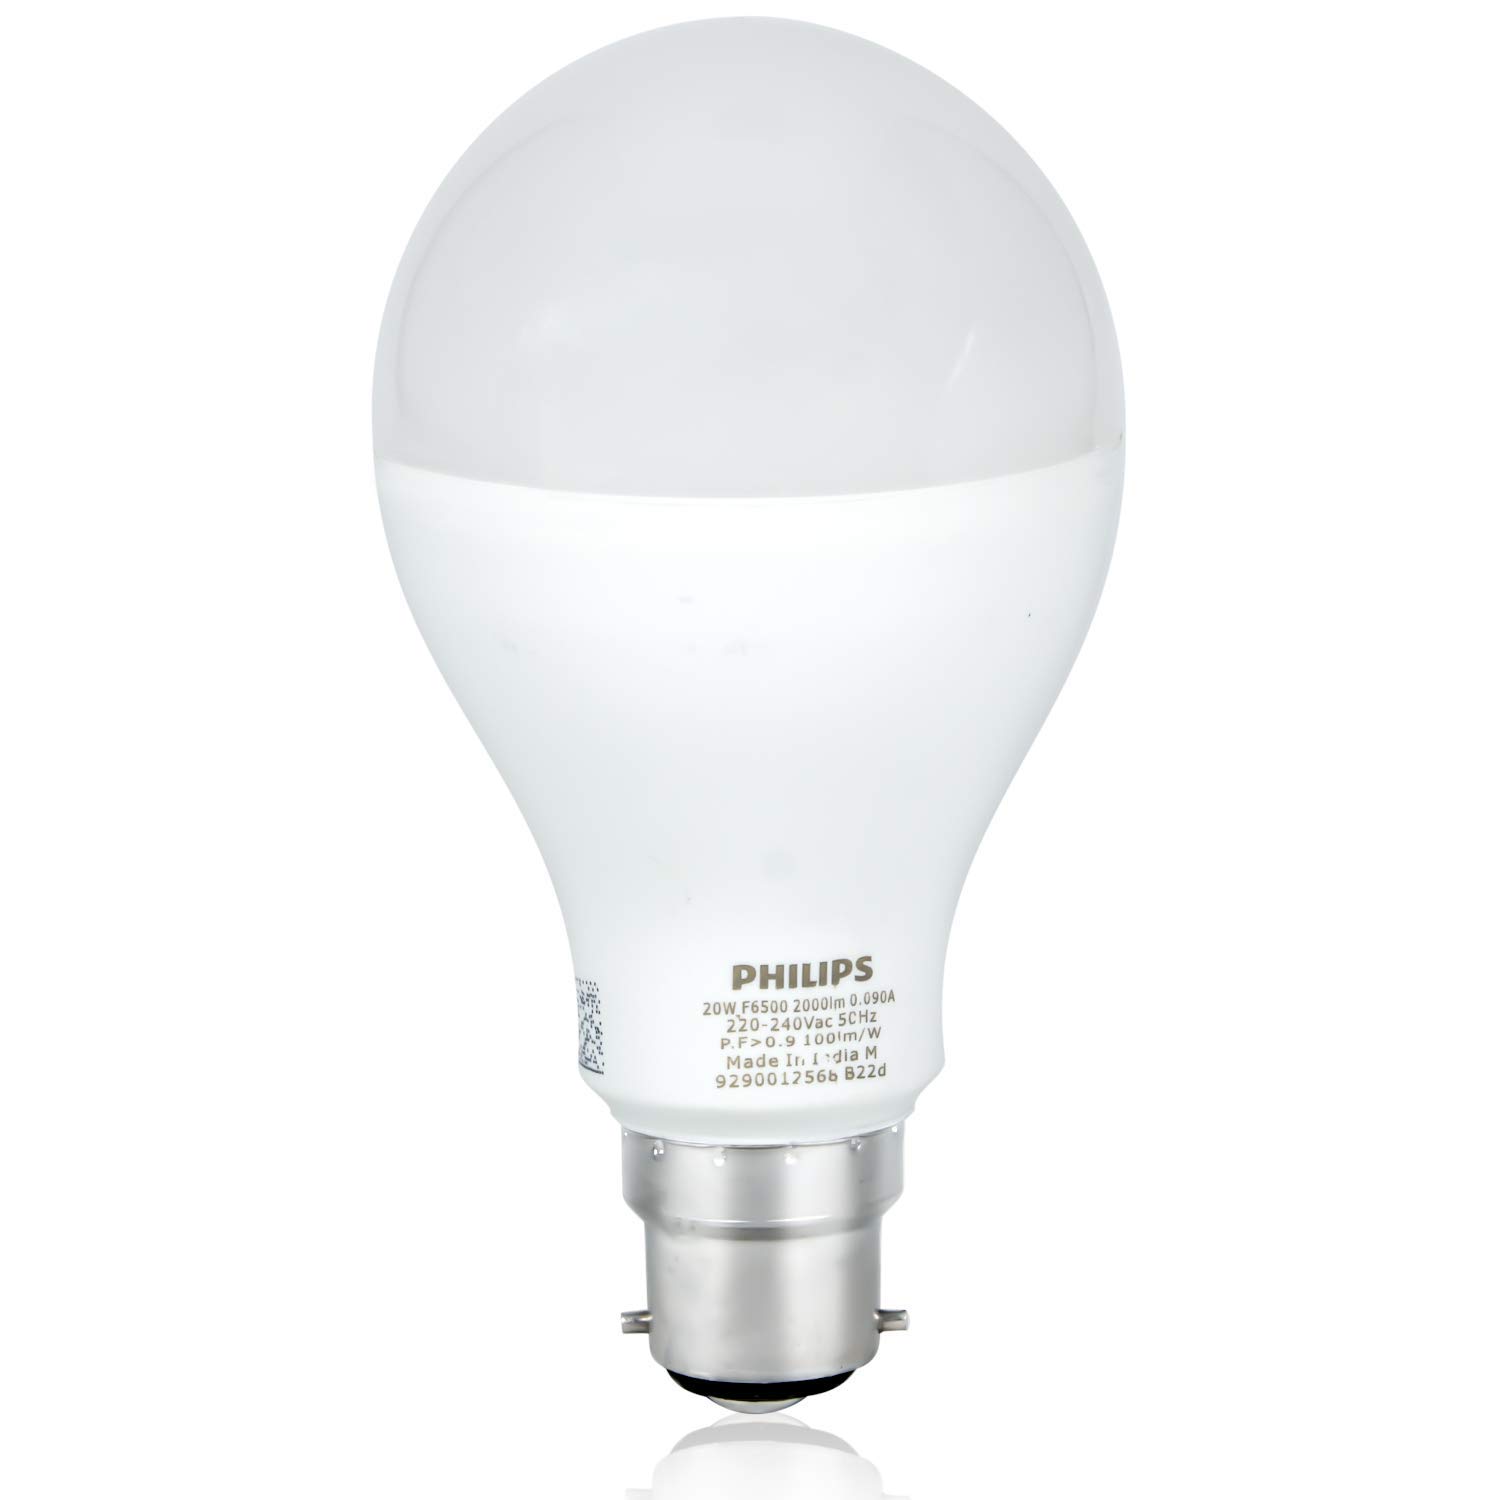 PHILIPS - LAMP 20W CDL B22